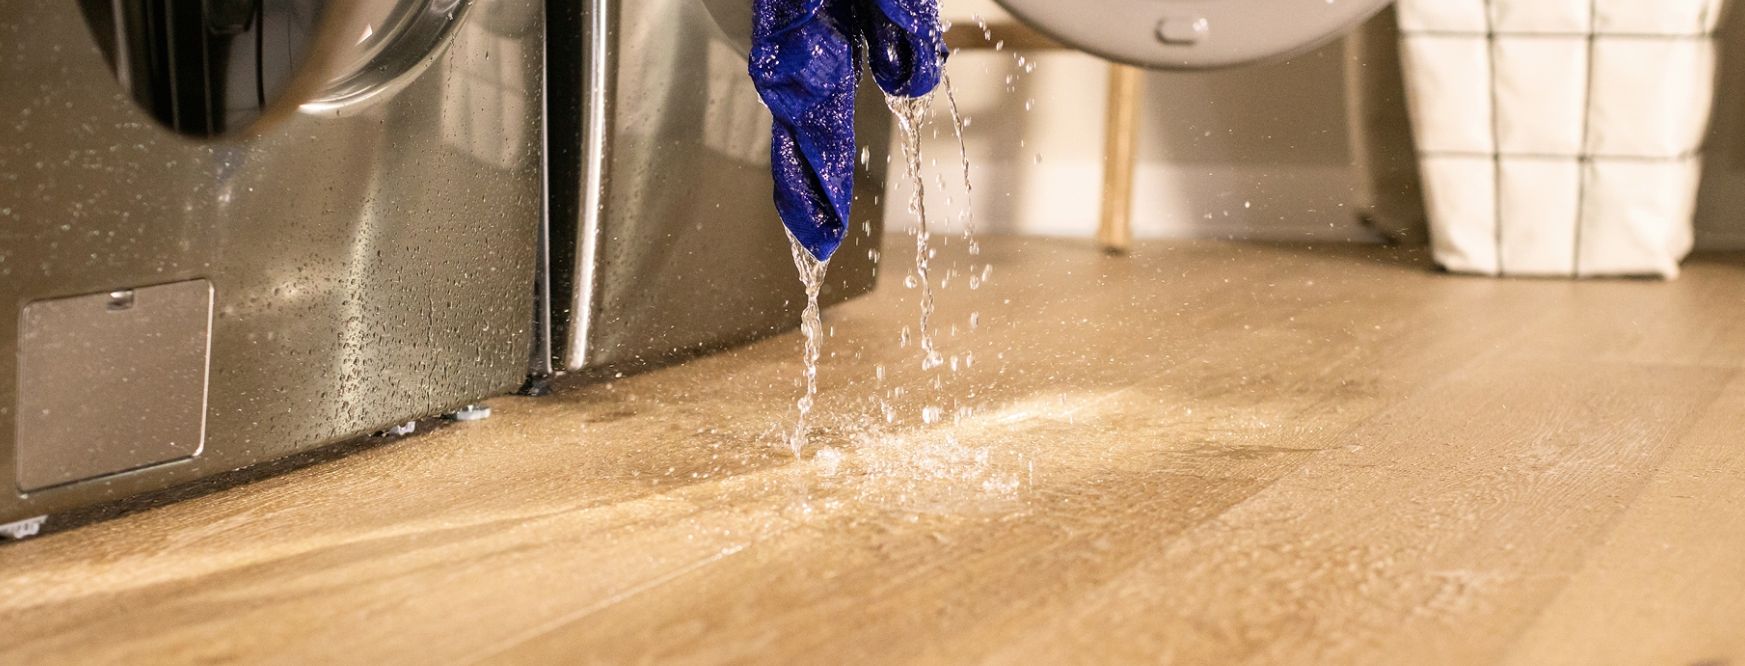 wet launmdry spilling water on hardwood flooring